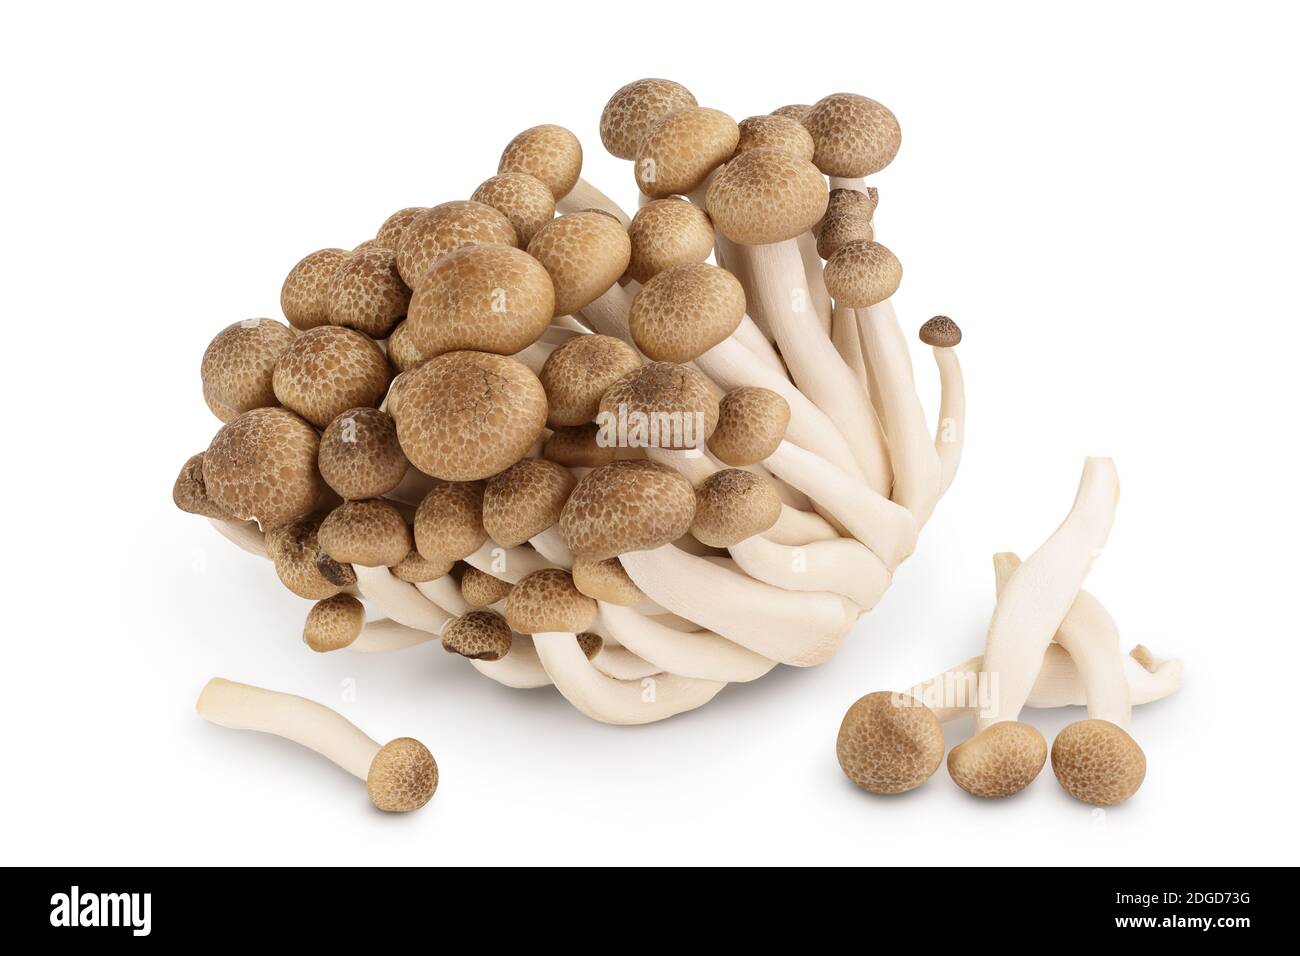 What Are Shimeji (Beech) Mushrooms